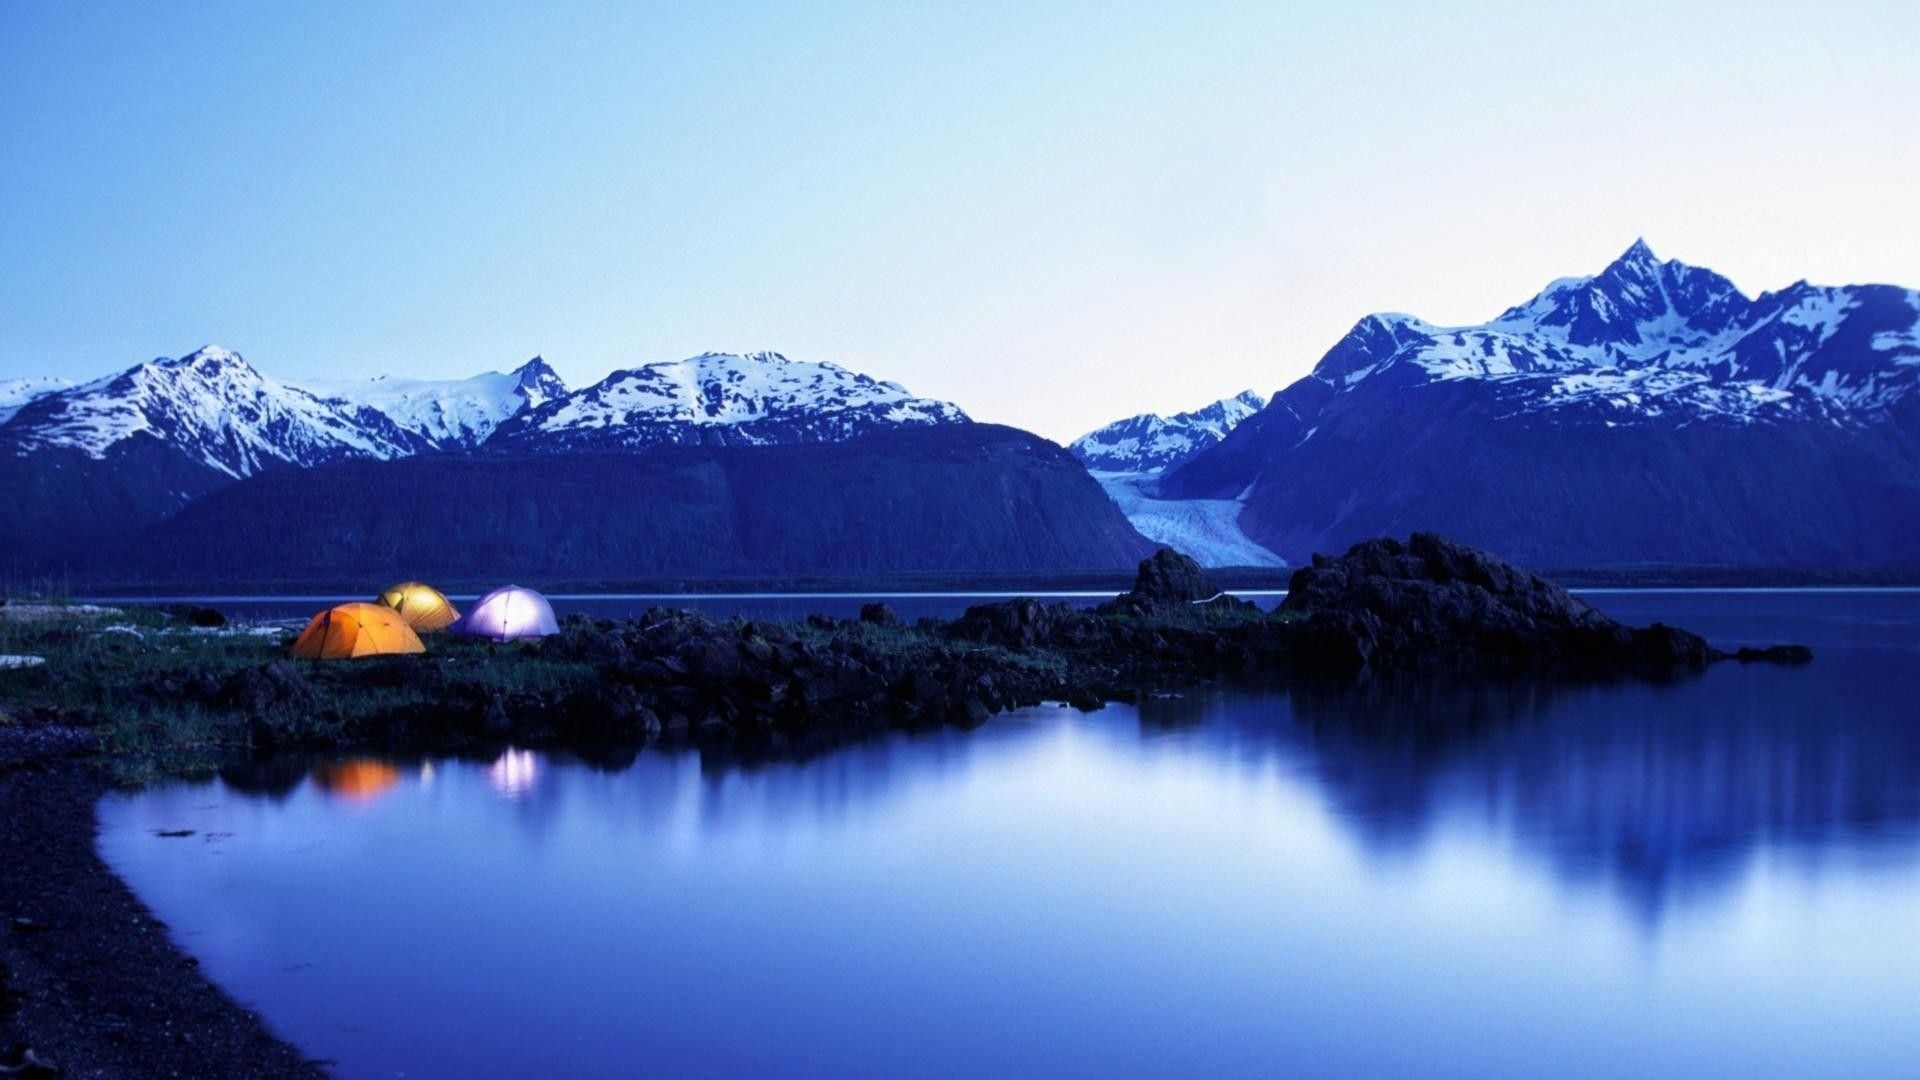 Alaska travels, HD wallpapers, 4K backgrounds, Natural beauty, 1920x1080 Full HD Desktop